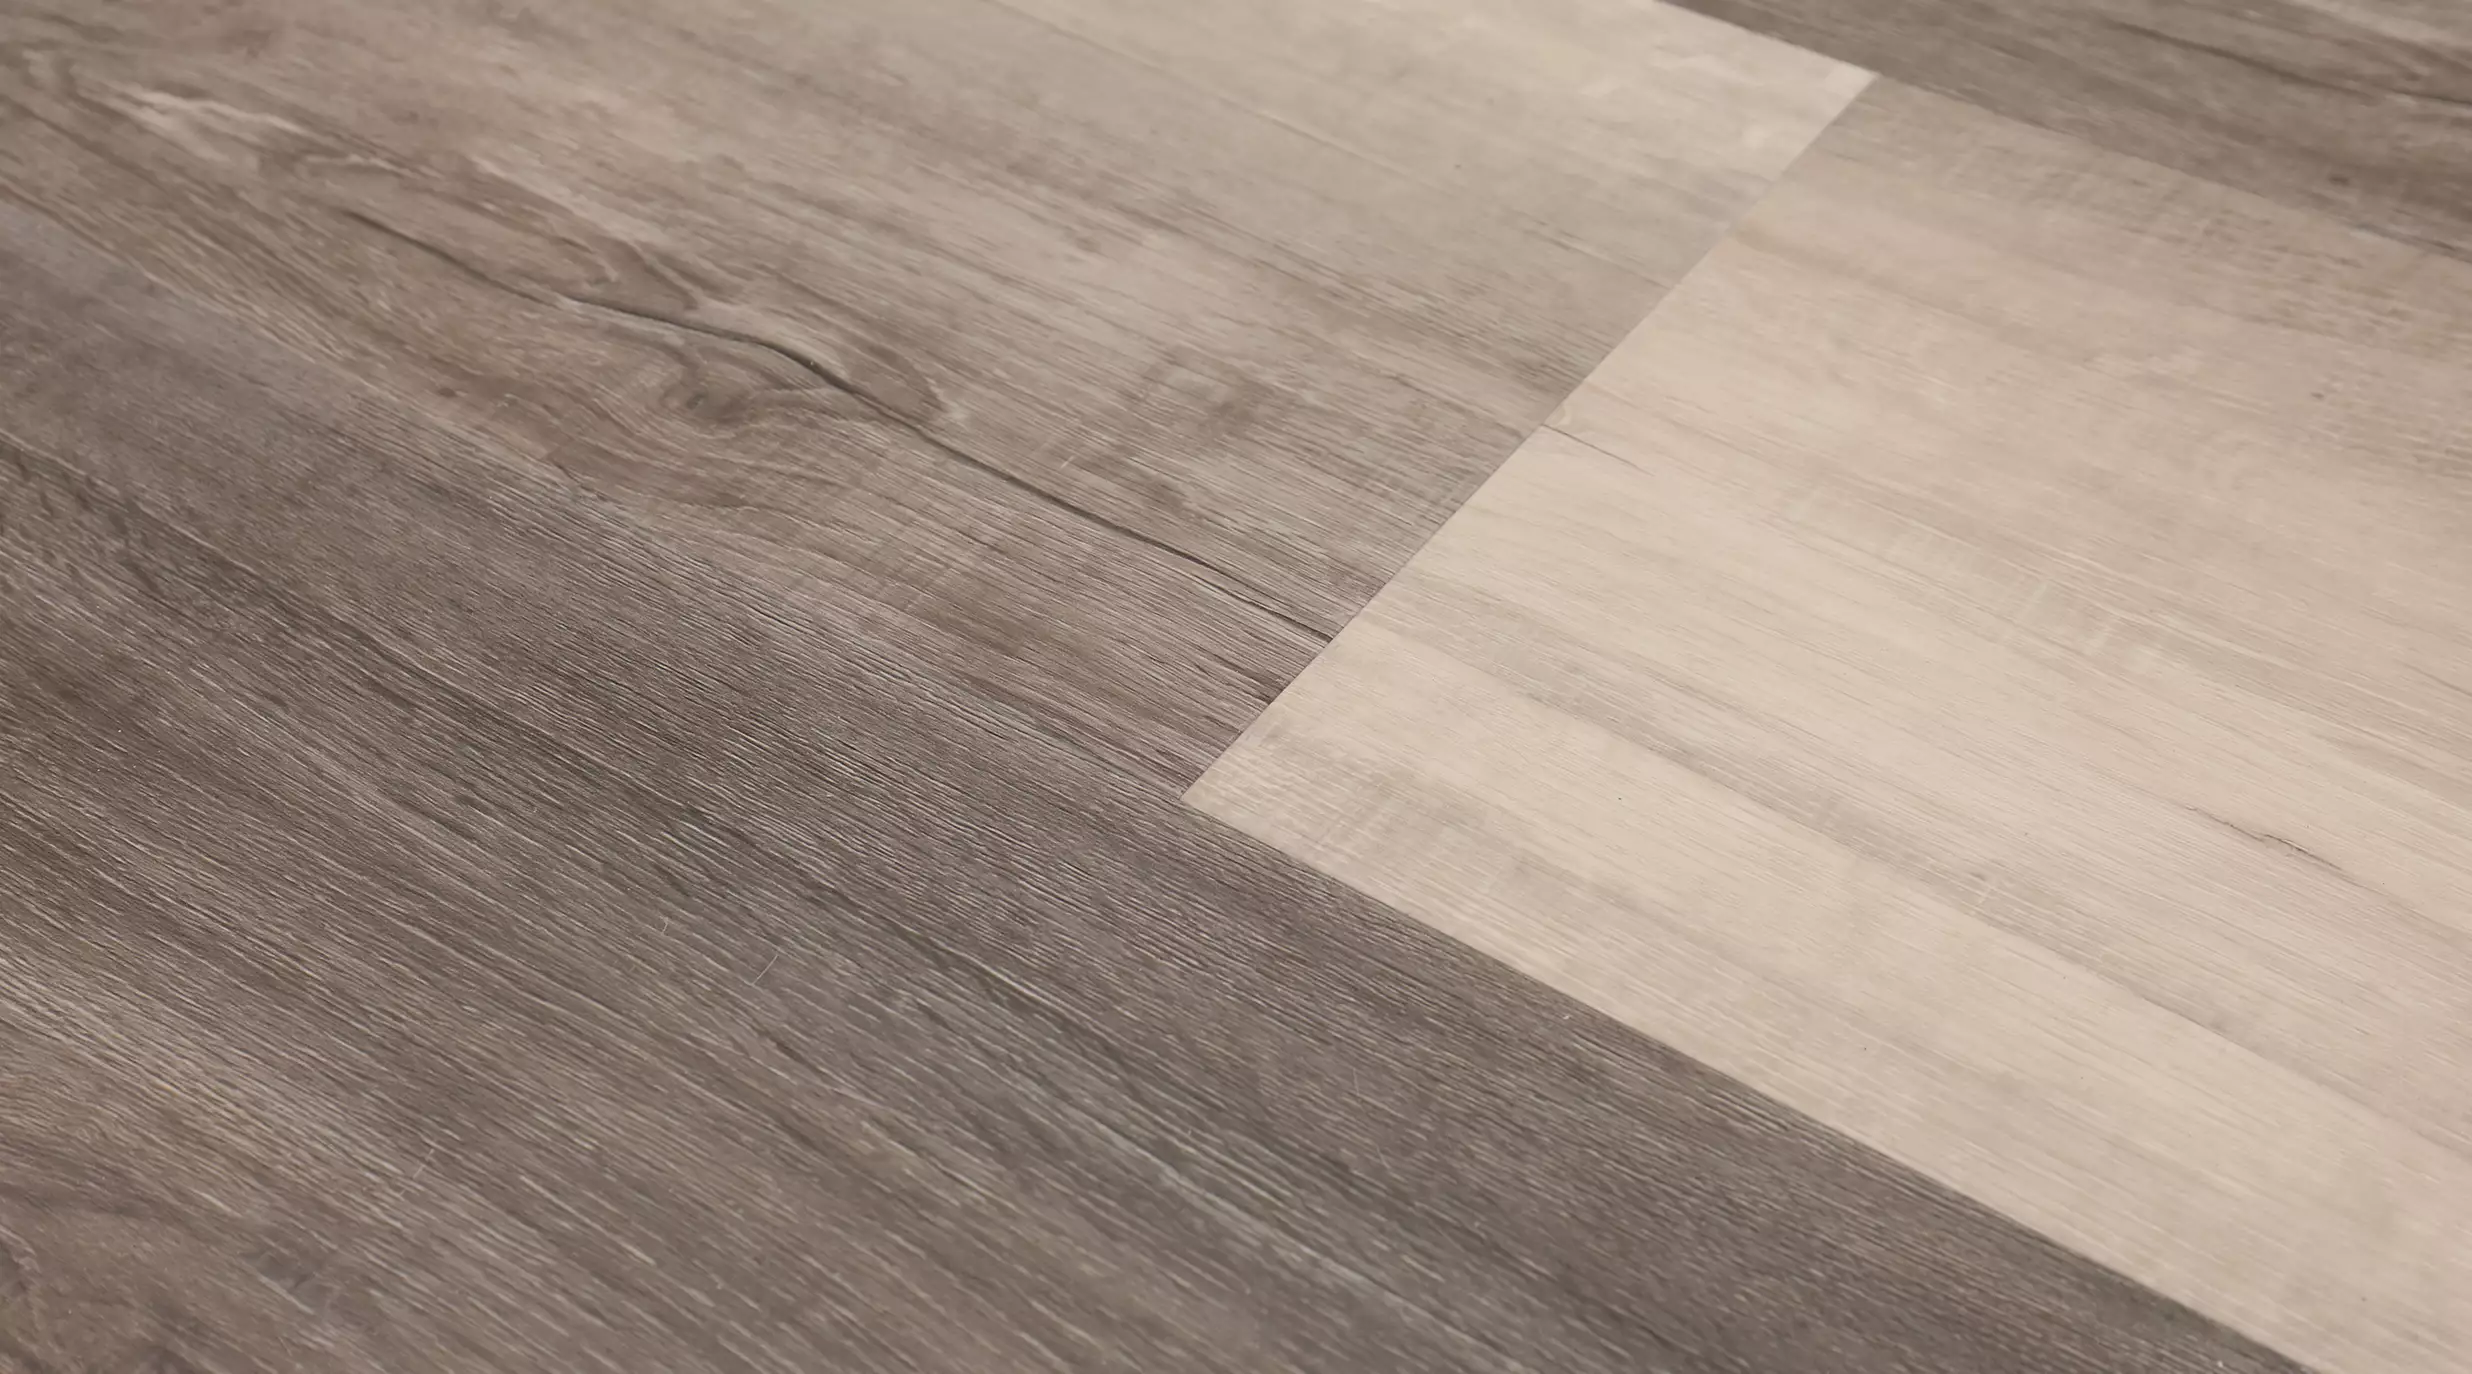 Sandstone lvp flooring